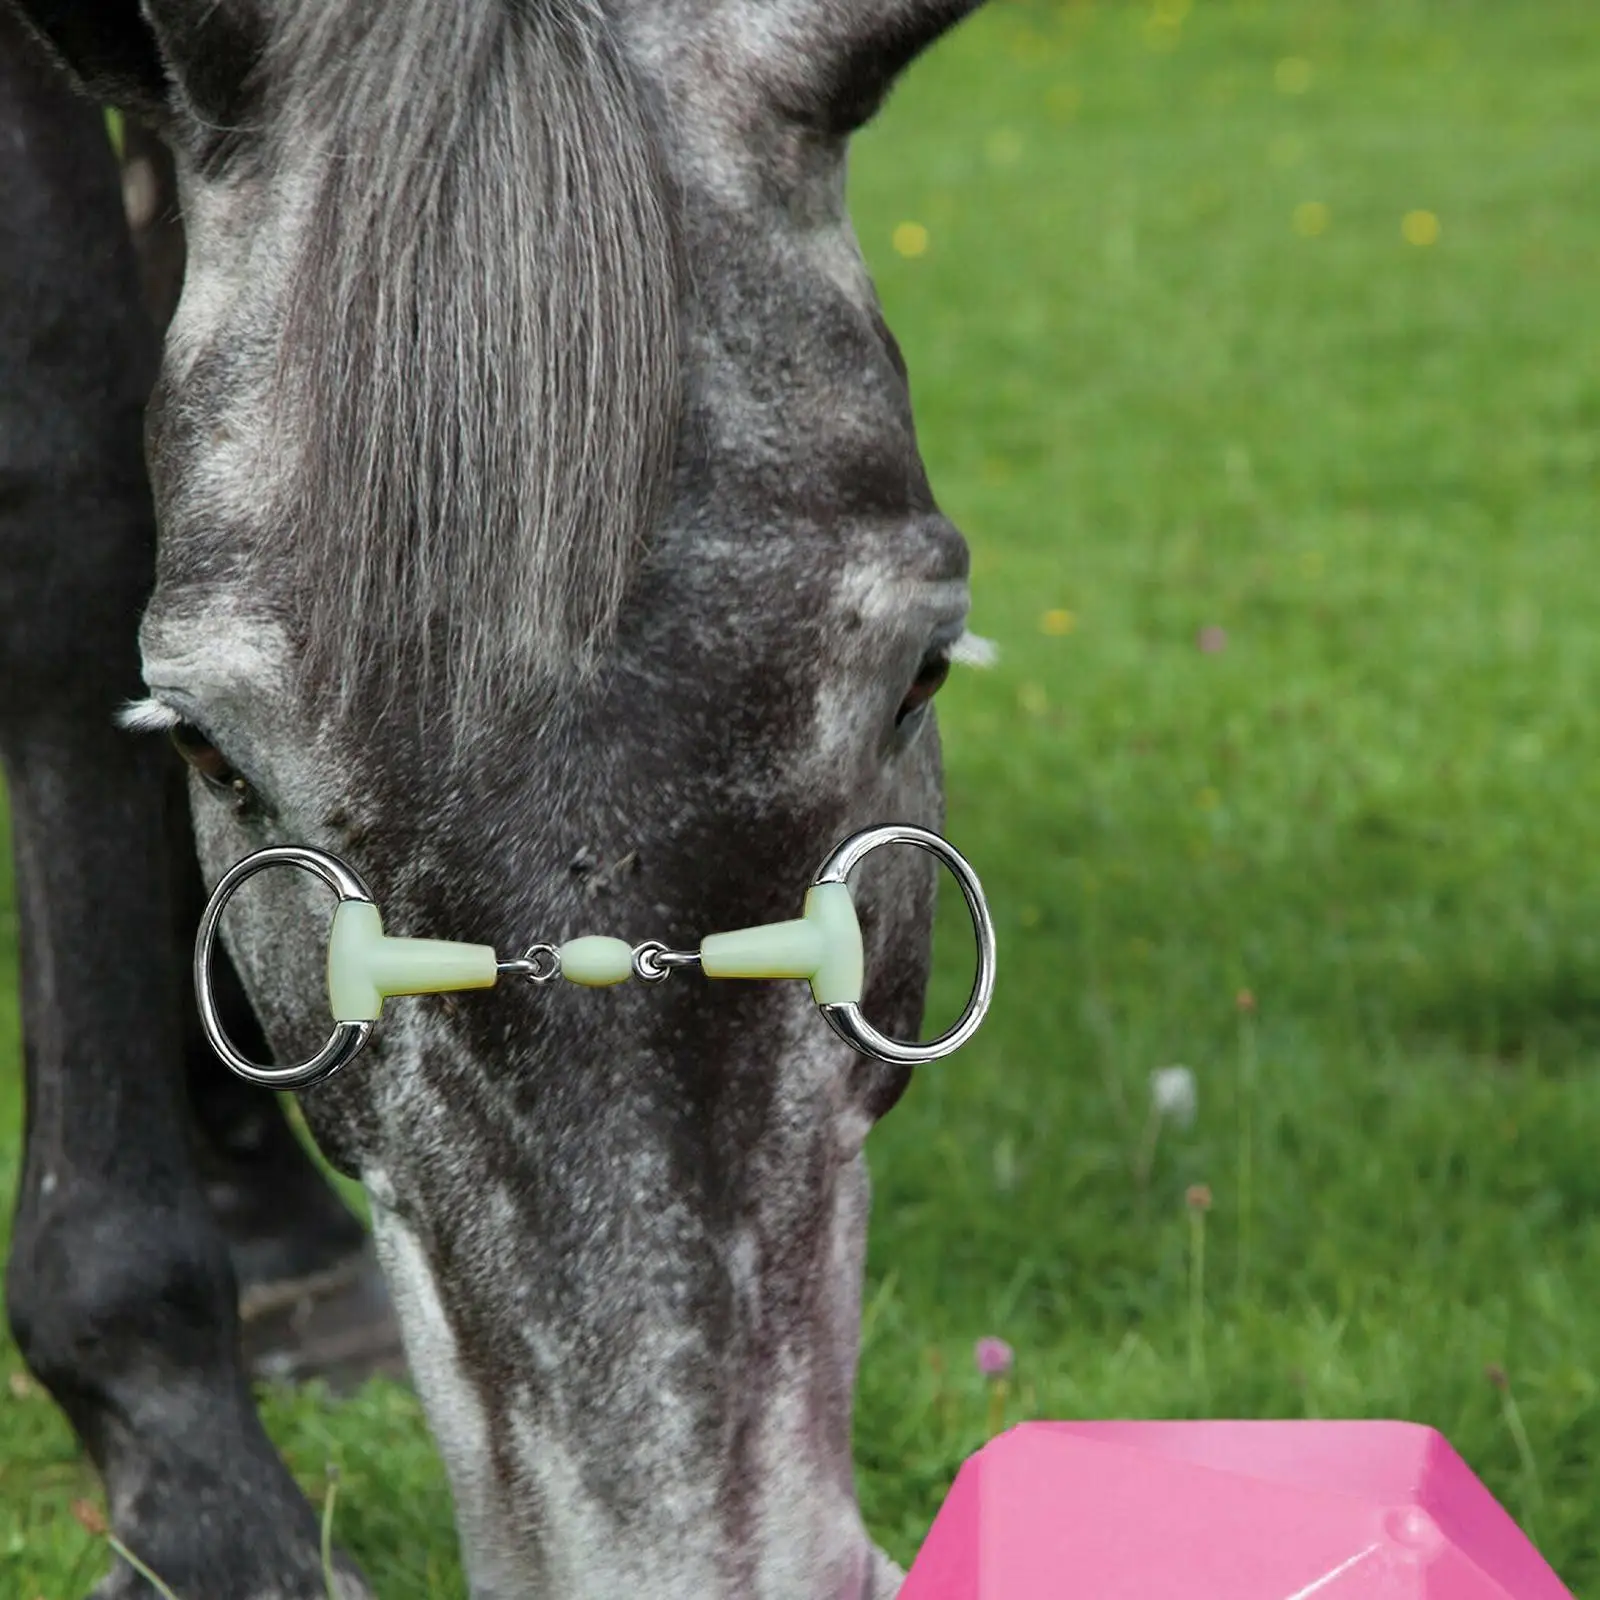 Horse Bit Horse Training Snaffle Tool for Draft Horses Mules